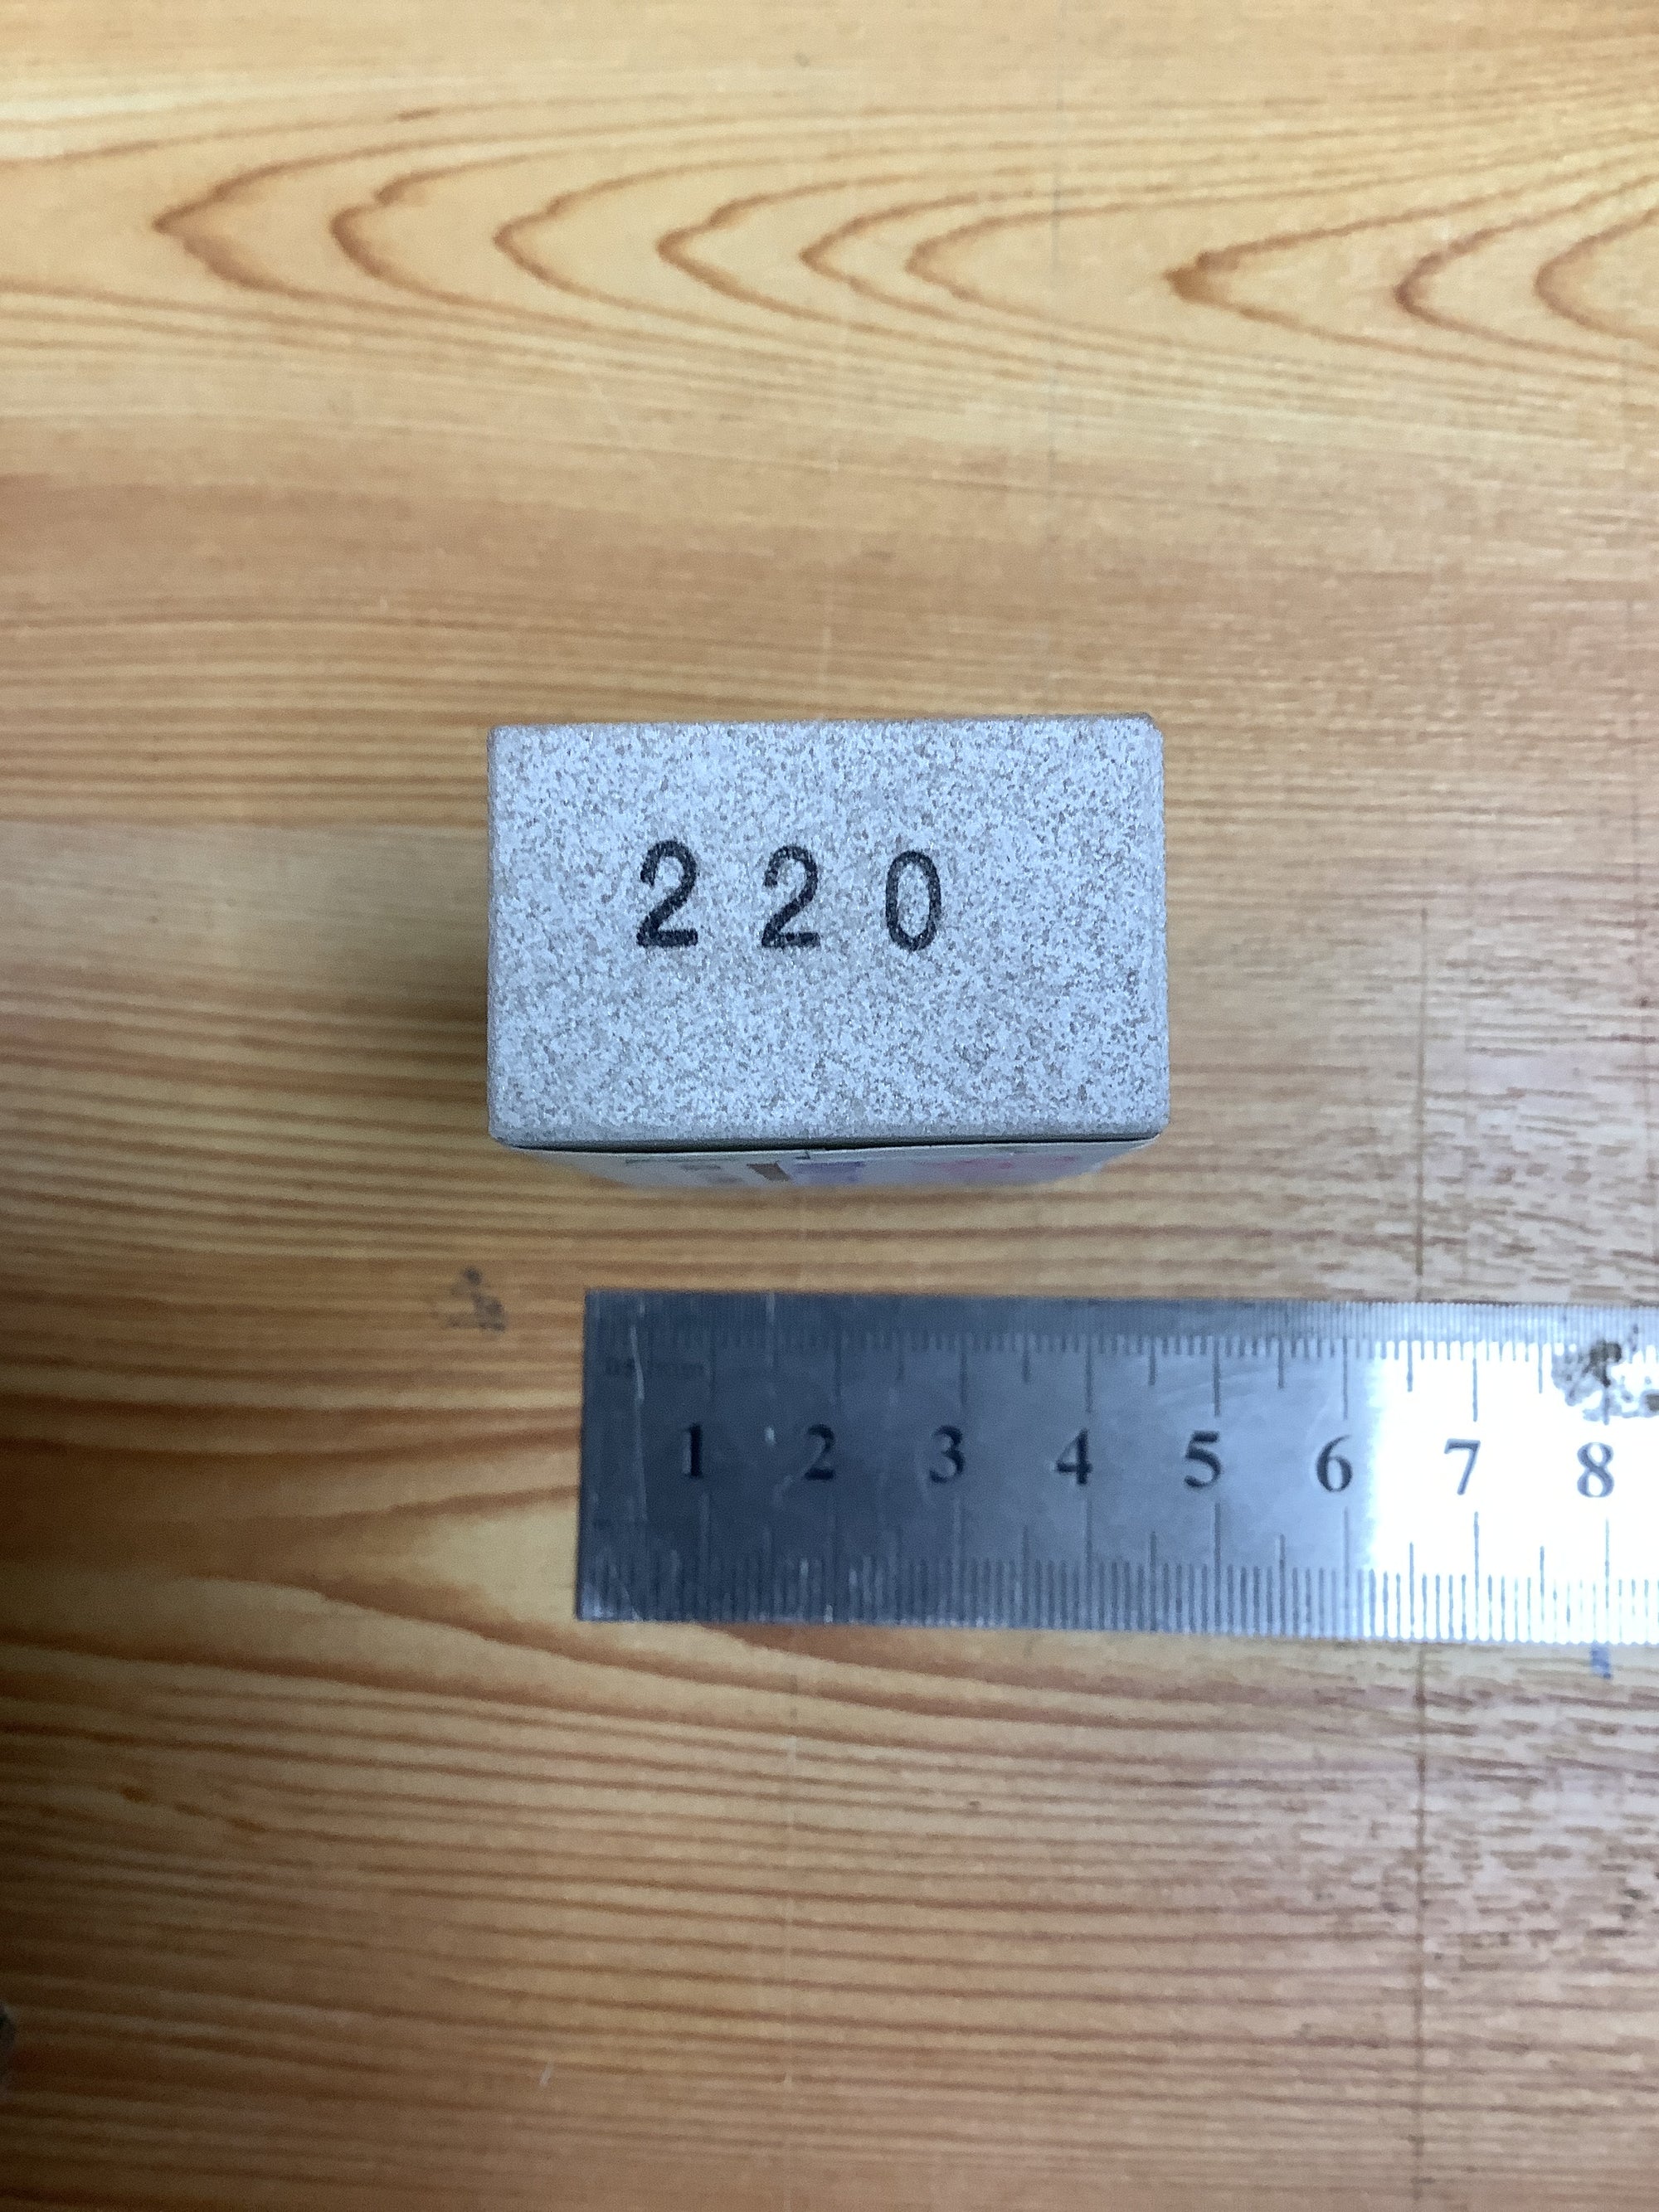 Naniwa Nagura Stone #220 Grit (Small Size) - Koi Knives